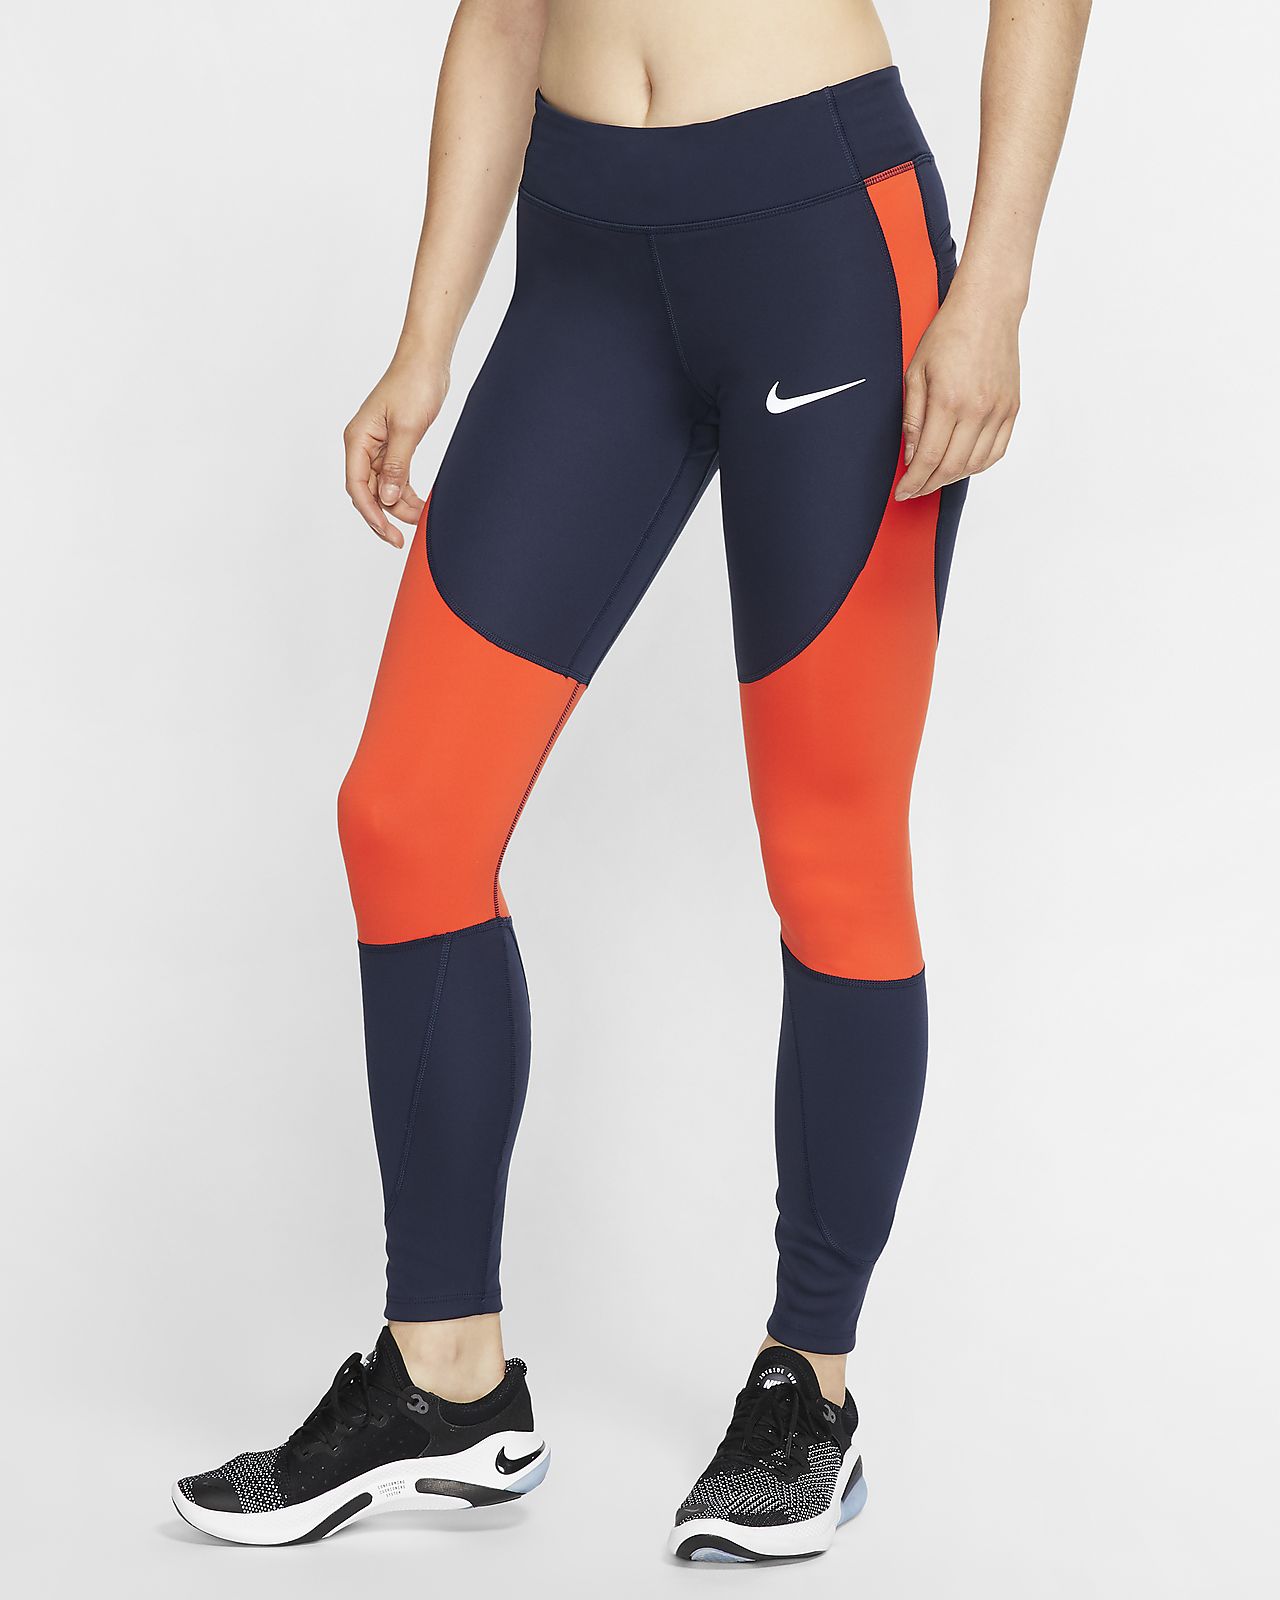 Nike Epic Pants Size Chart